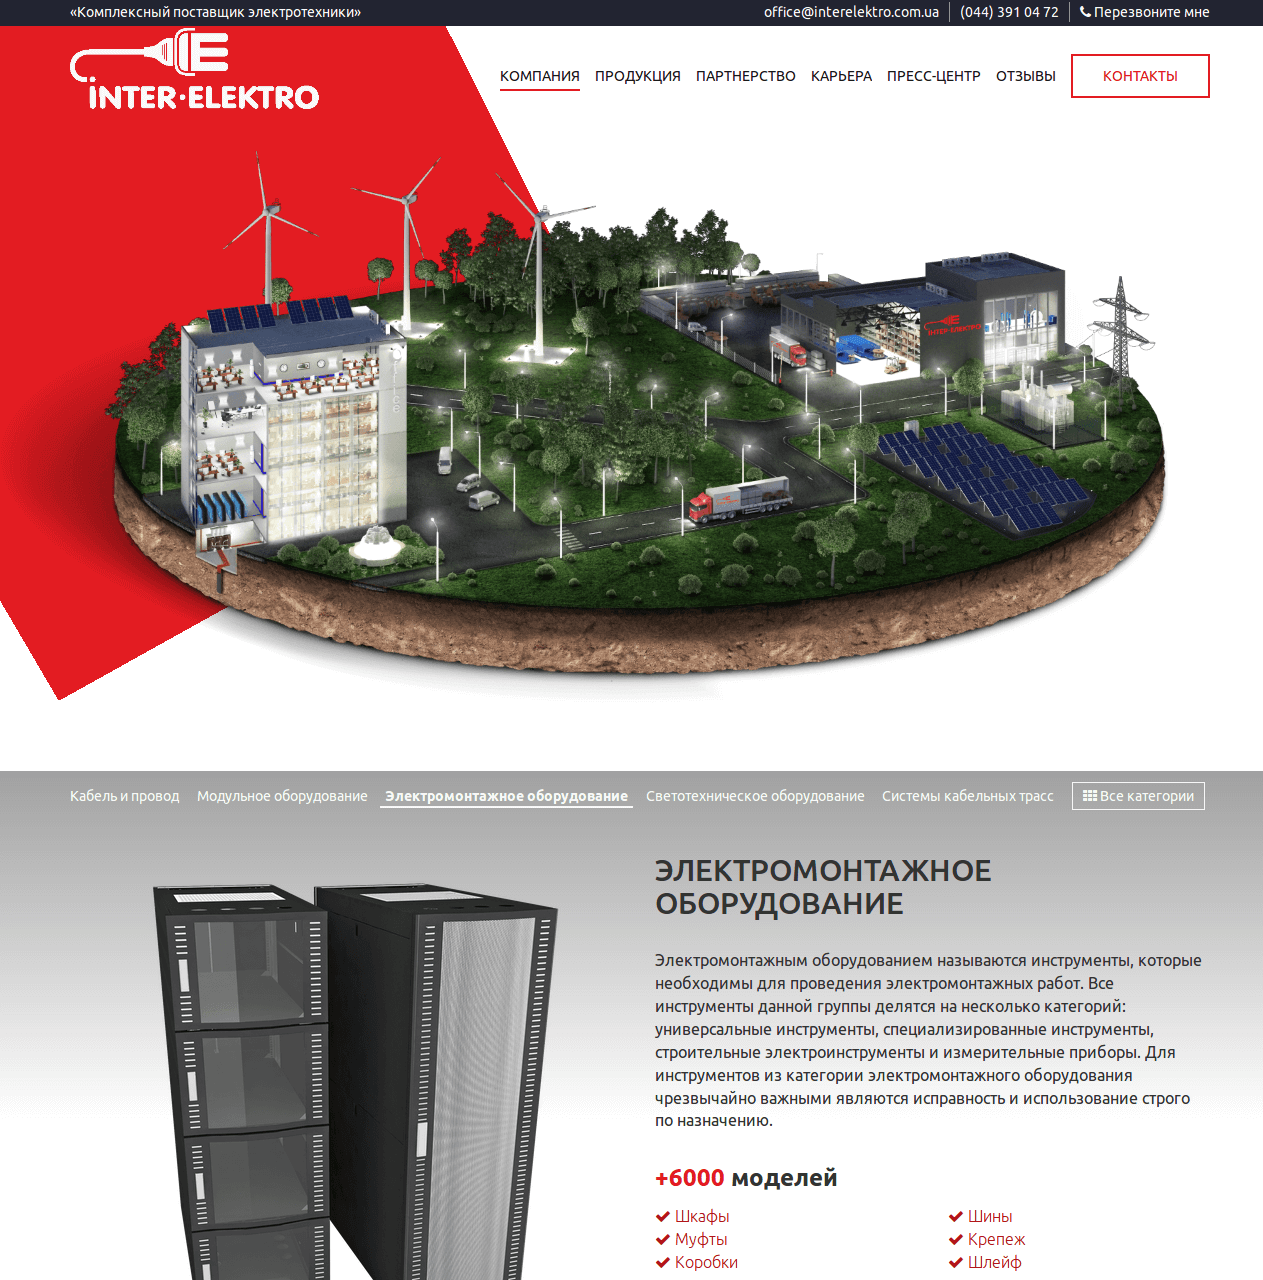 Homepage of "Interelektro" company site